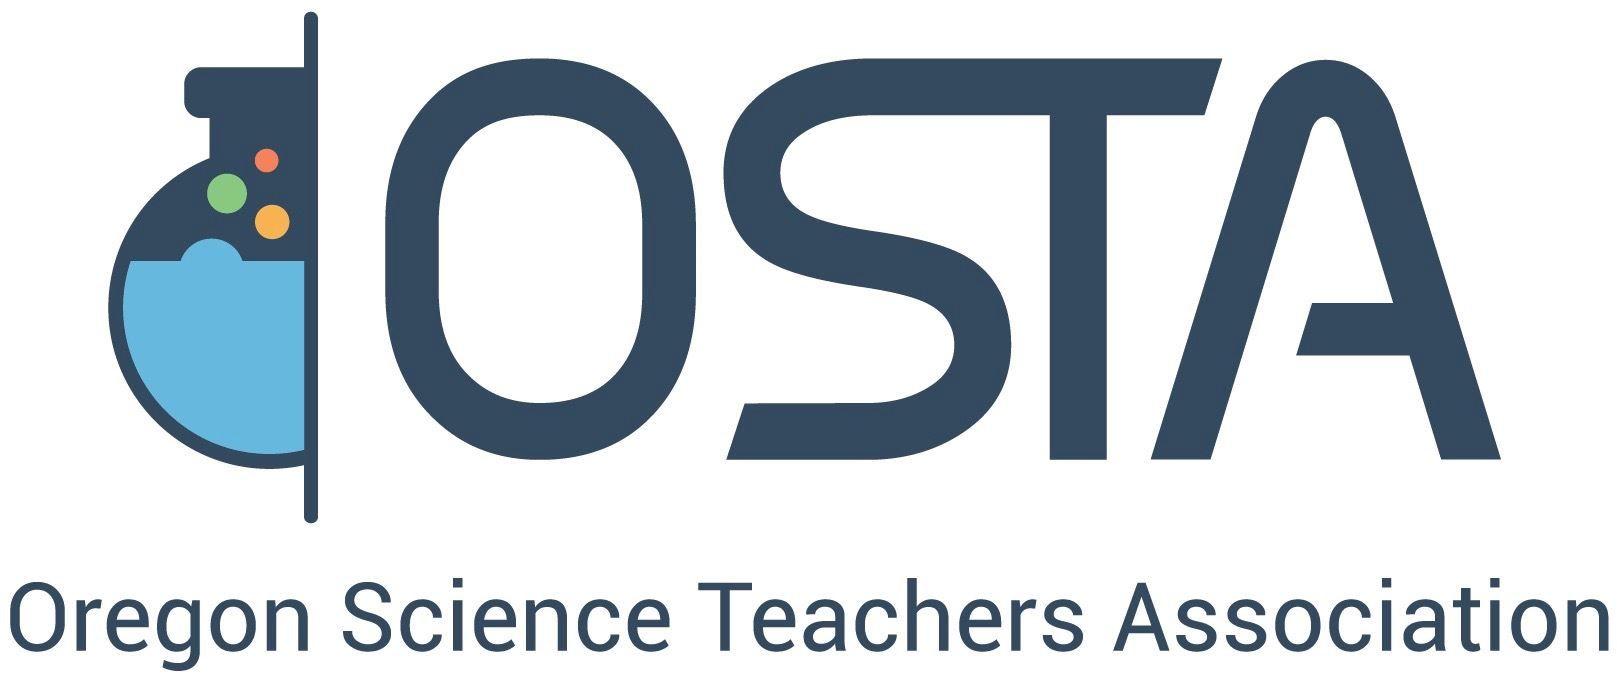 Contest Logo - Oregon Science Teachers Association